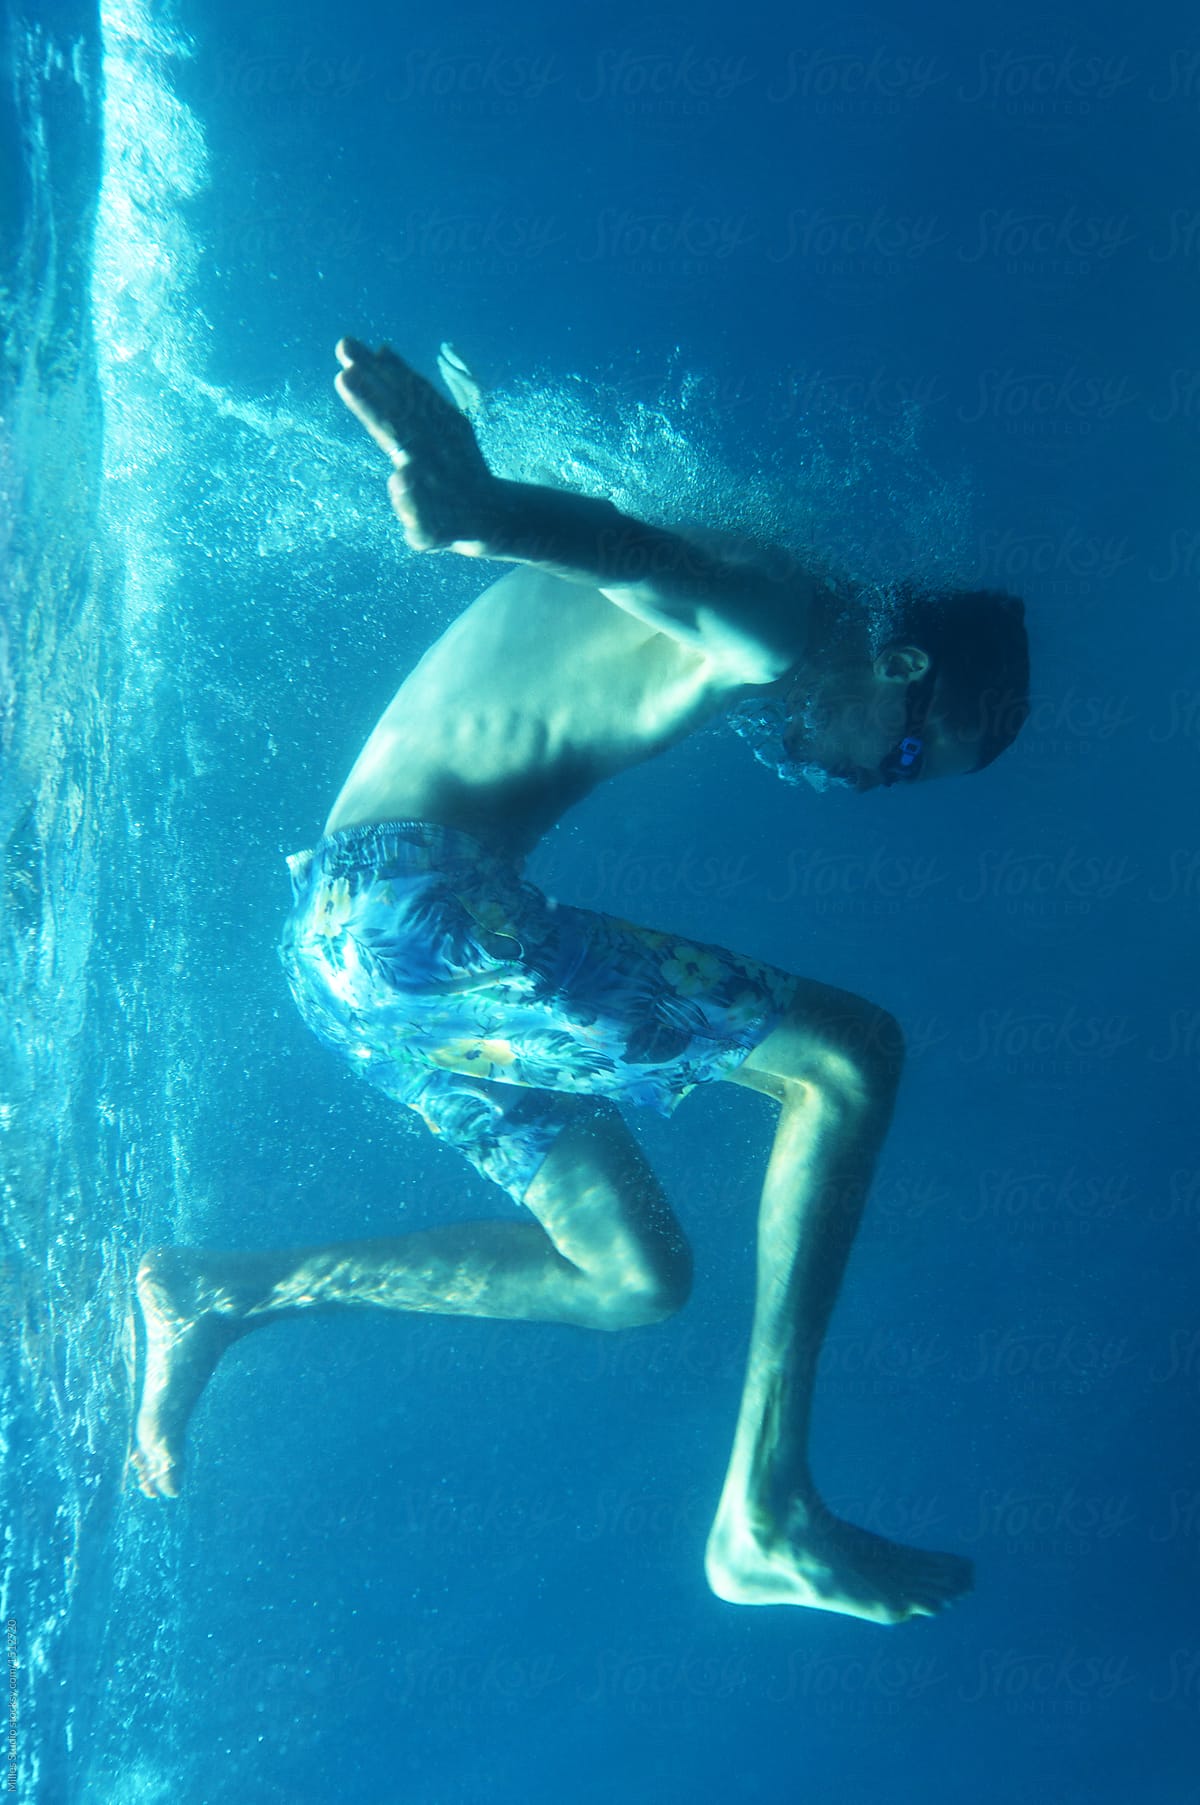 Snorkeler jumping in blue water